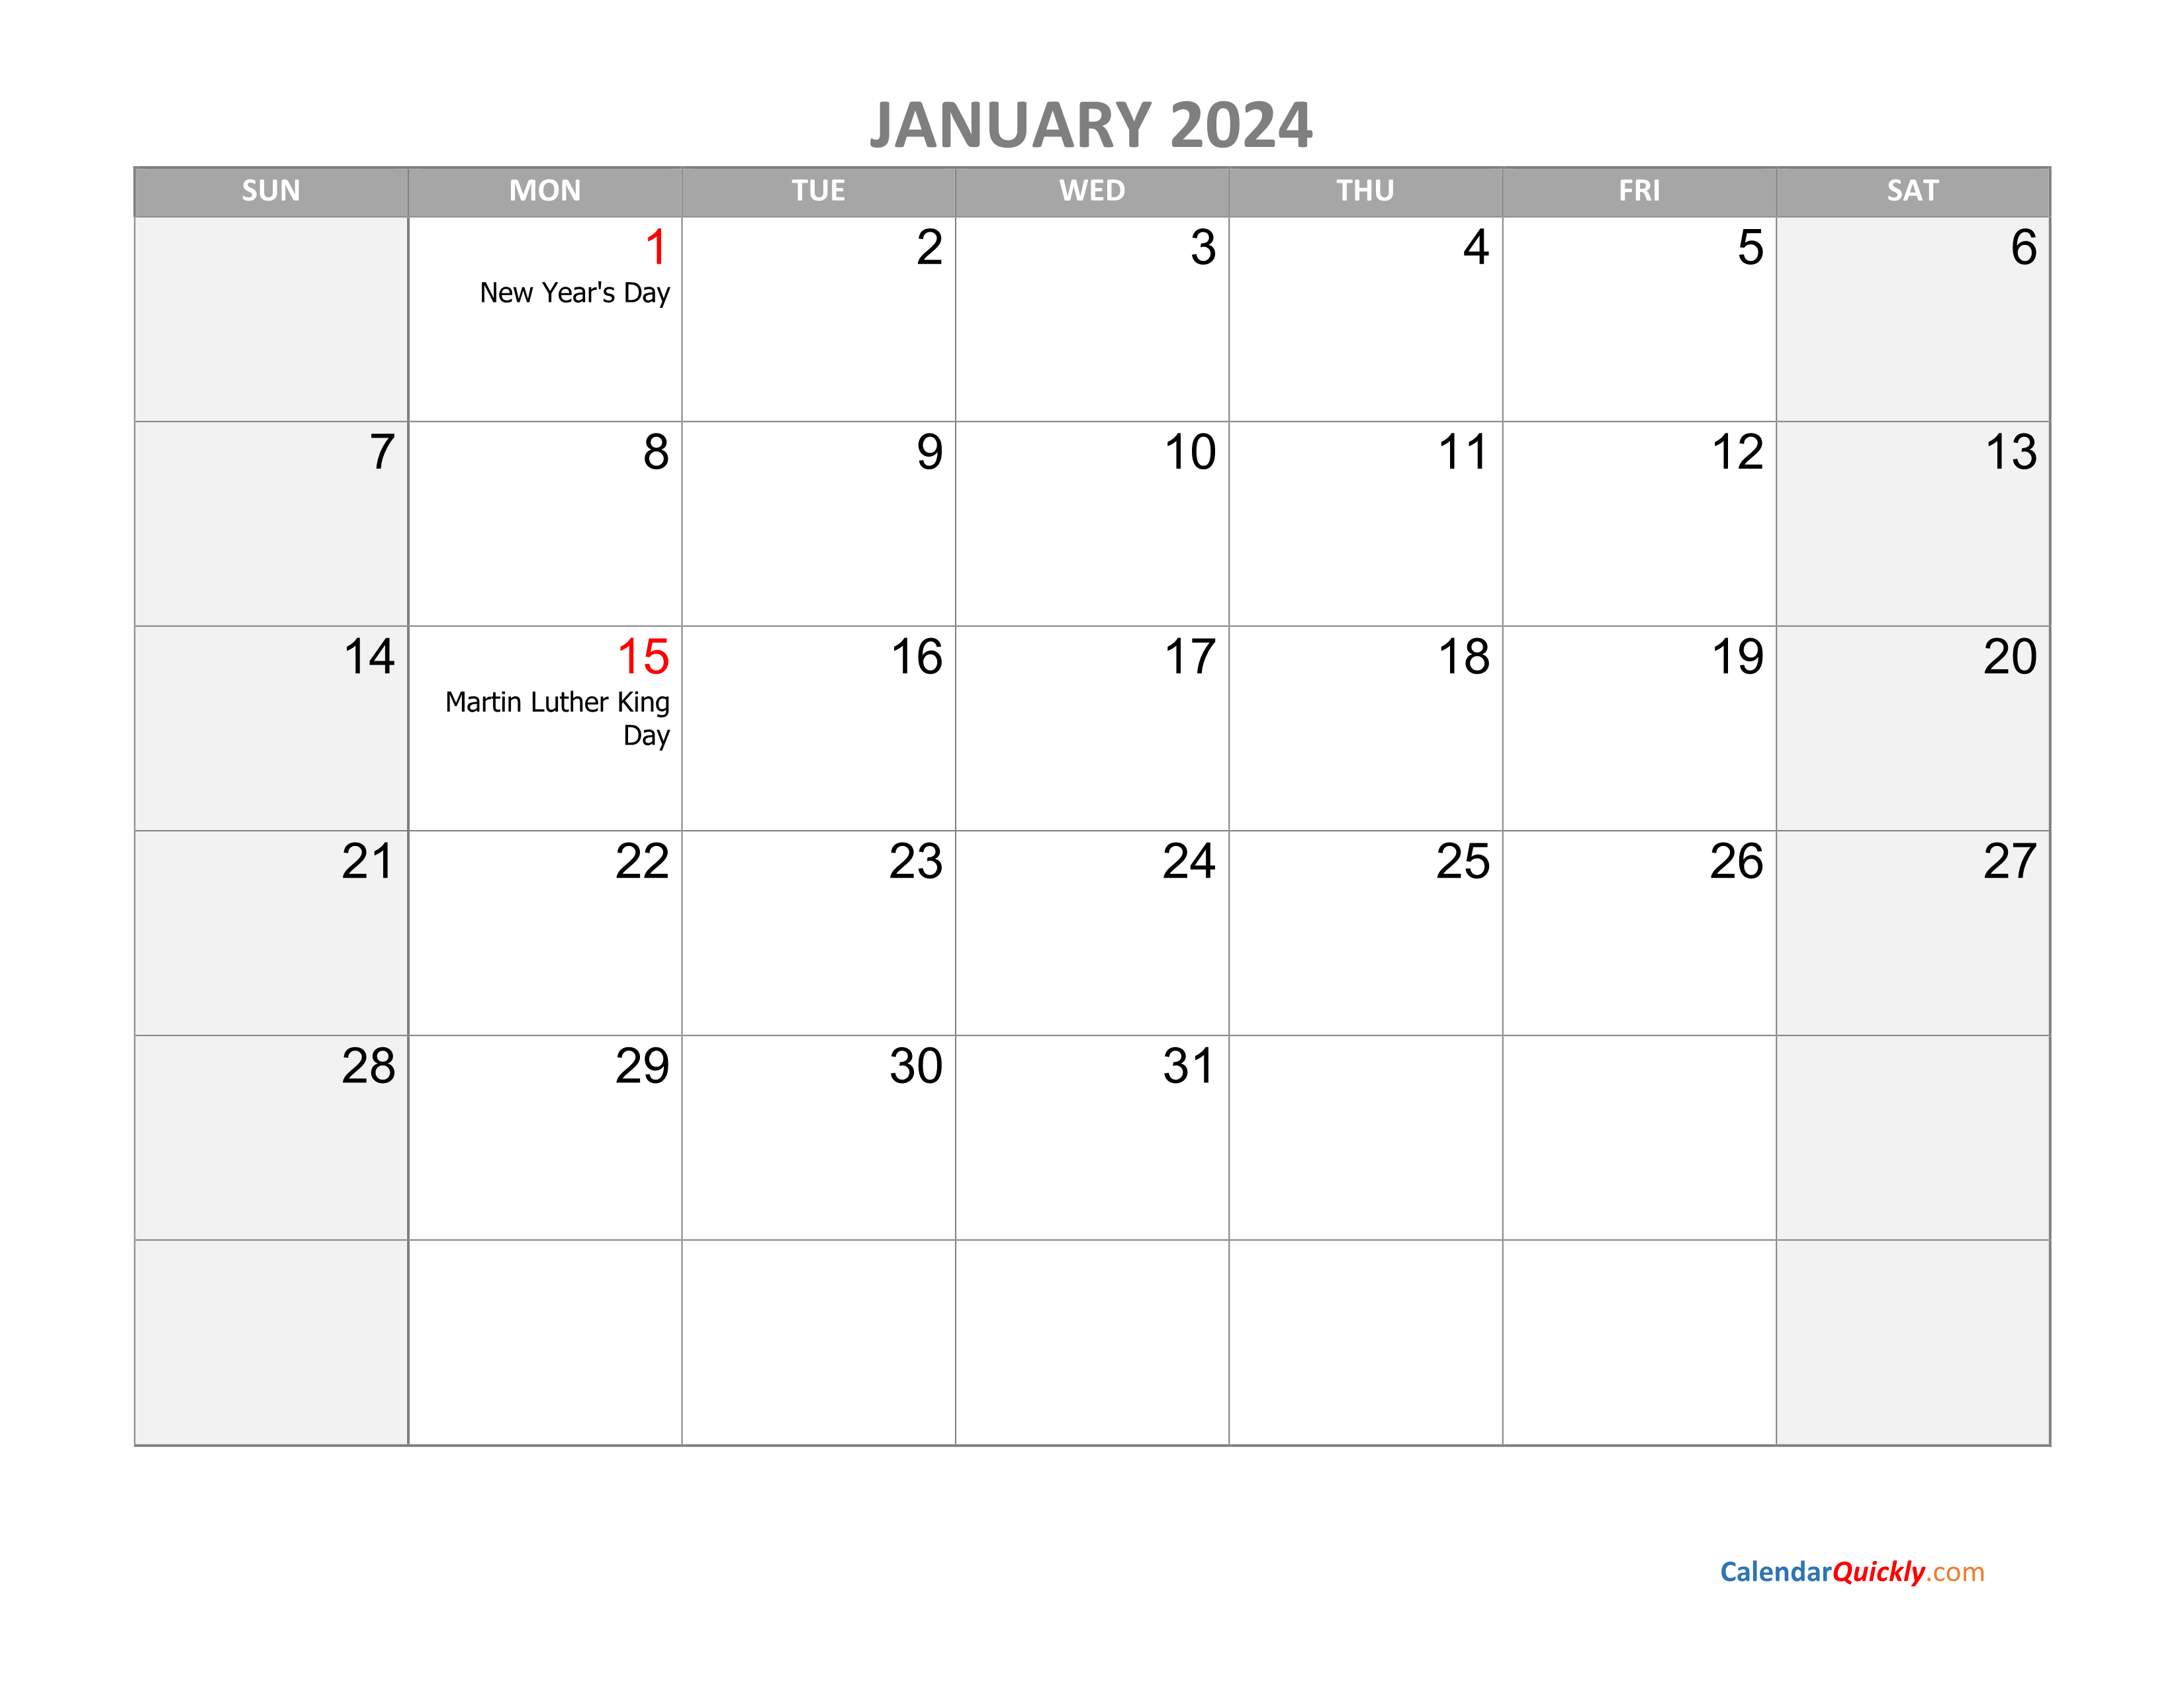 Monthly Calendar 2024 Printable Calendar Quickly Riset